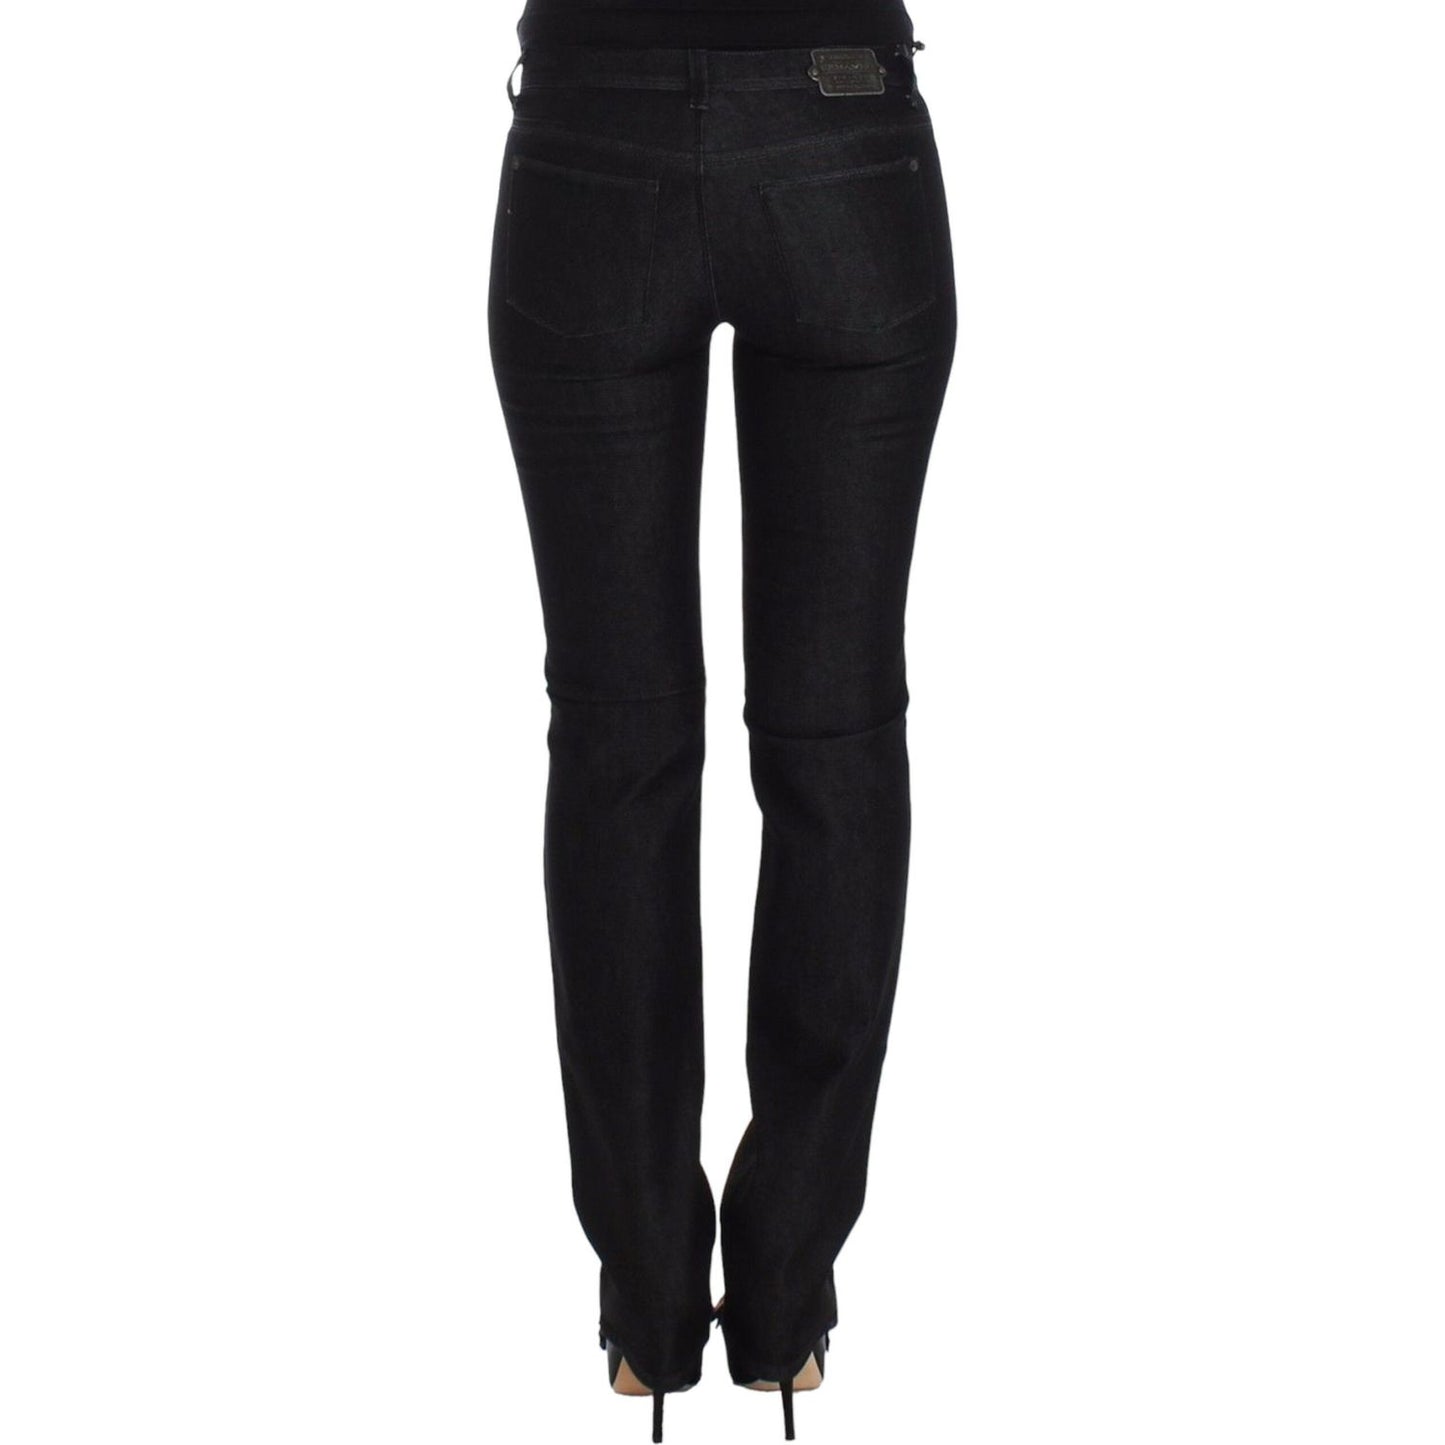 Ermanno Scervino Chic Black Slim Skinny Jeans Jeans & Pants black-slim-jeans-denim-pants-skinny-leg-stretch-1